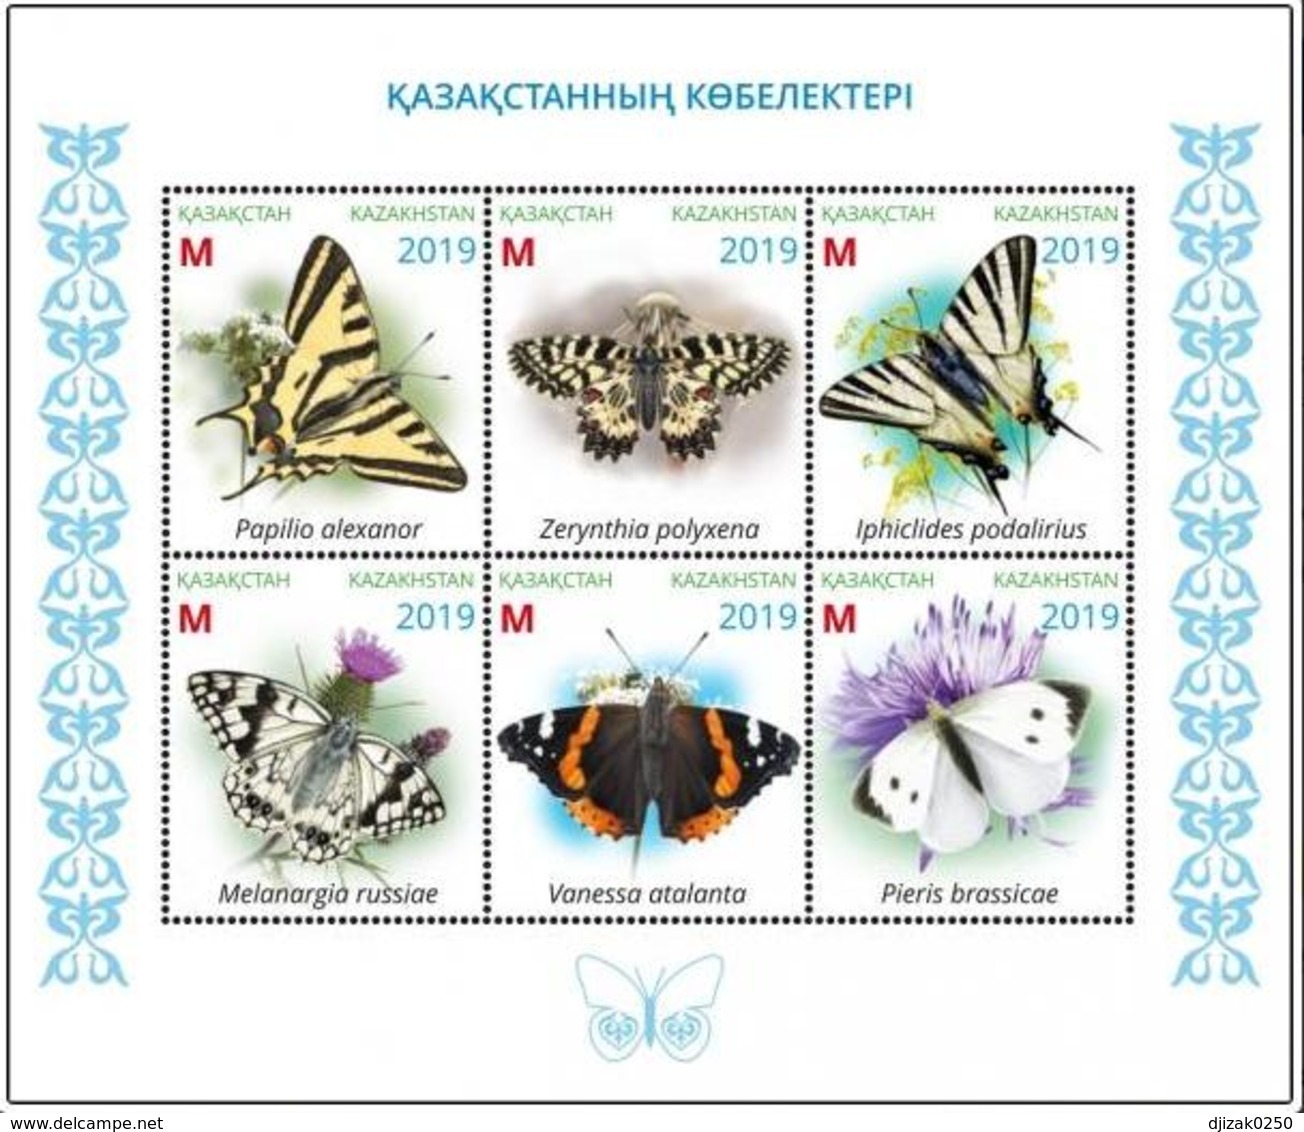 Kazakhstan 2019.Souvenir Sheet. Butterflies Of Kazakhstan. NEW!!! - Kazakhstan